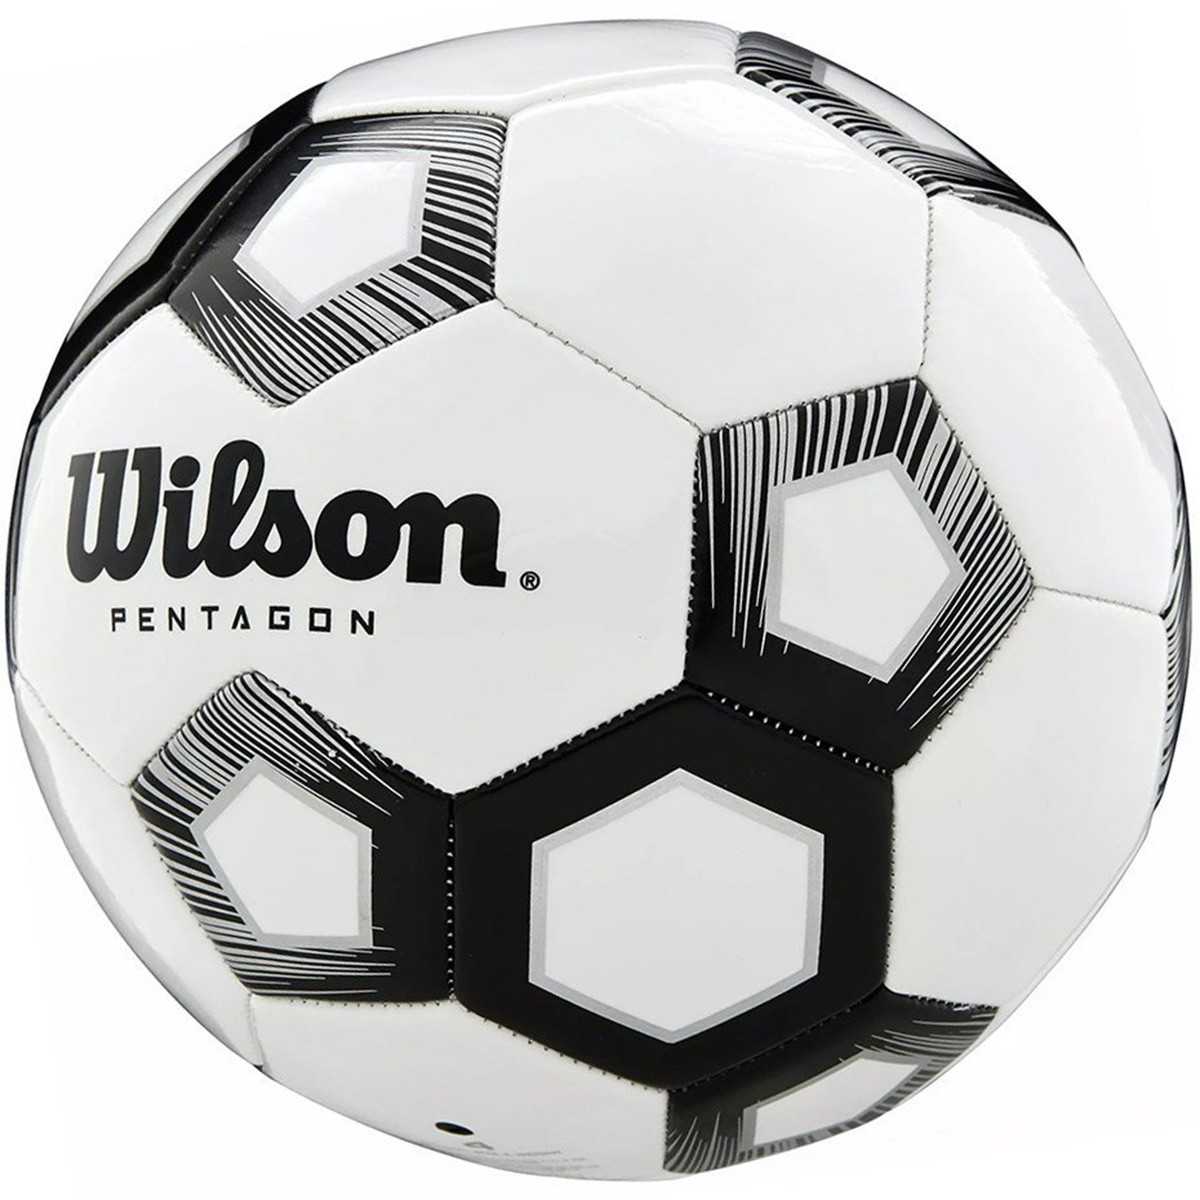 Wilson Pentagon futbolo kamuolys